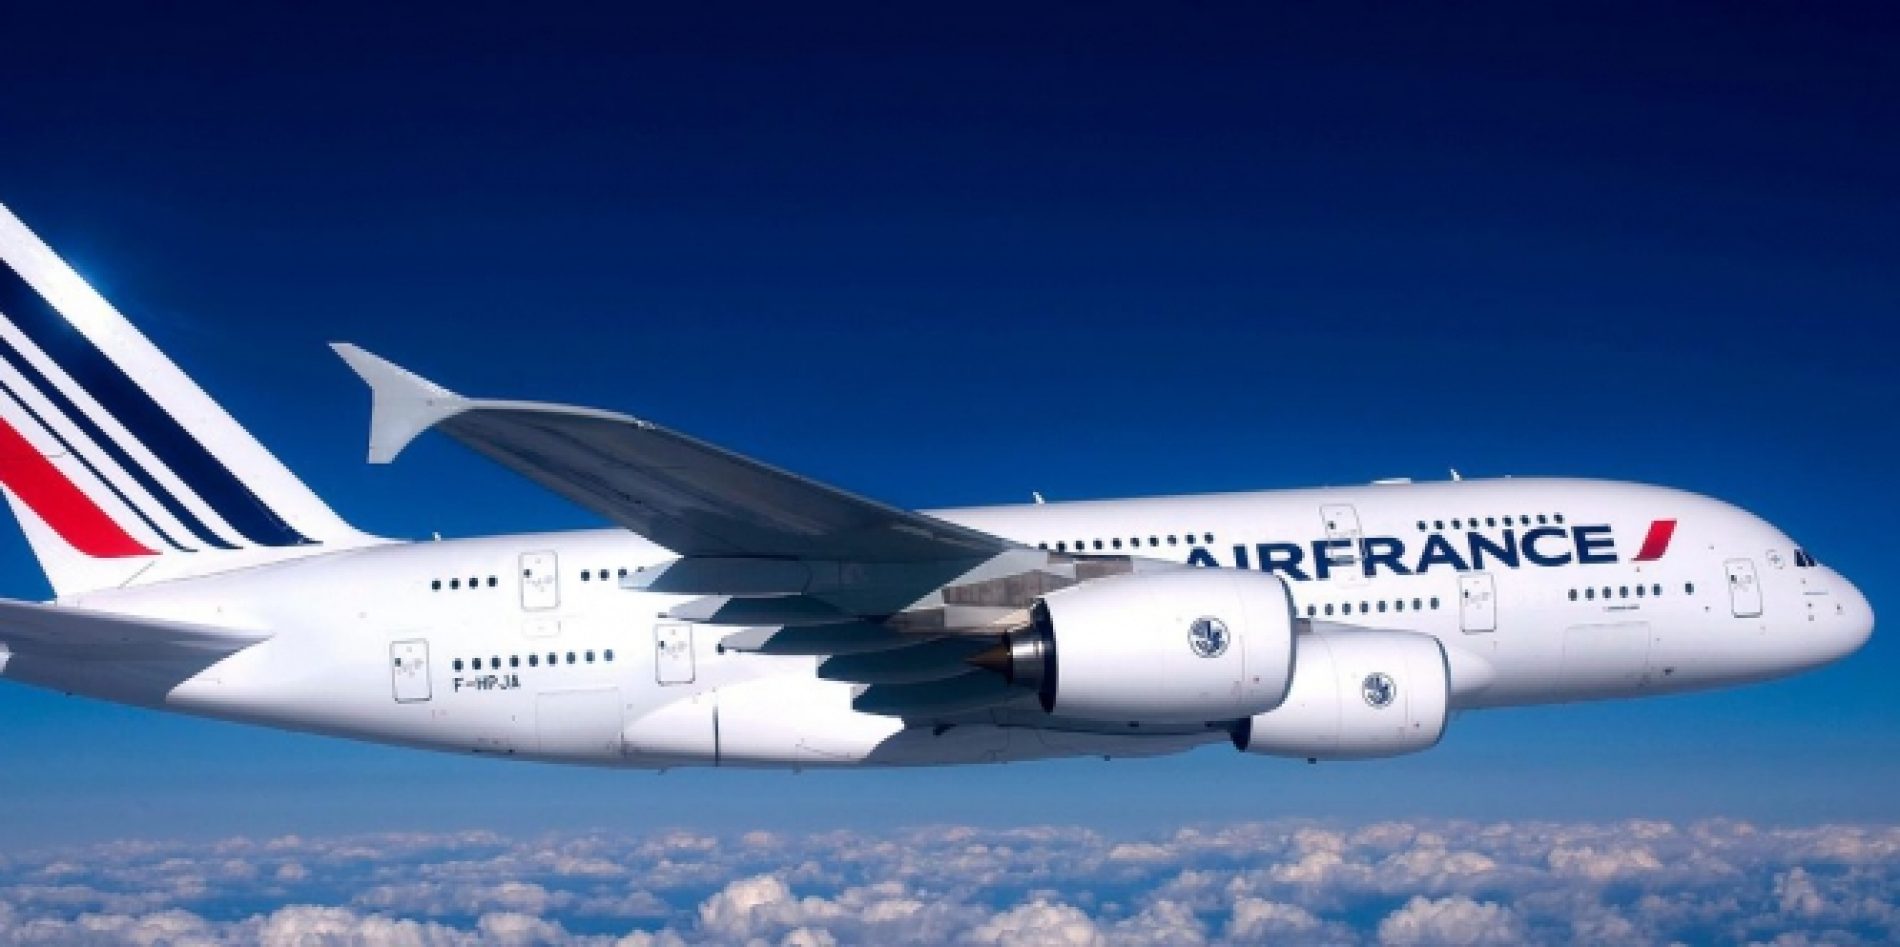 Transports intelligents: Air France va remplacer les cartes d’embarquement par la reconnaissance faciale